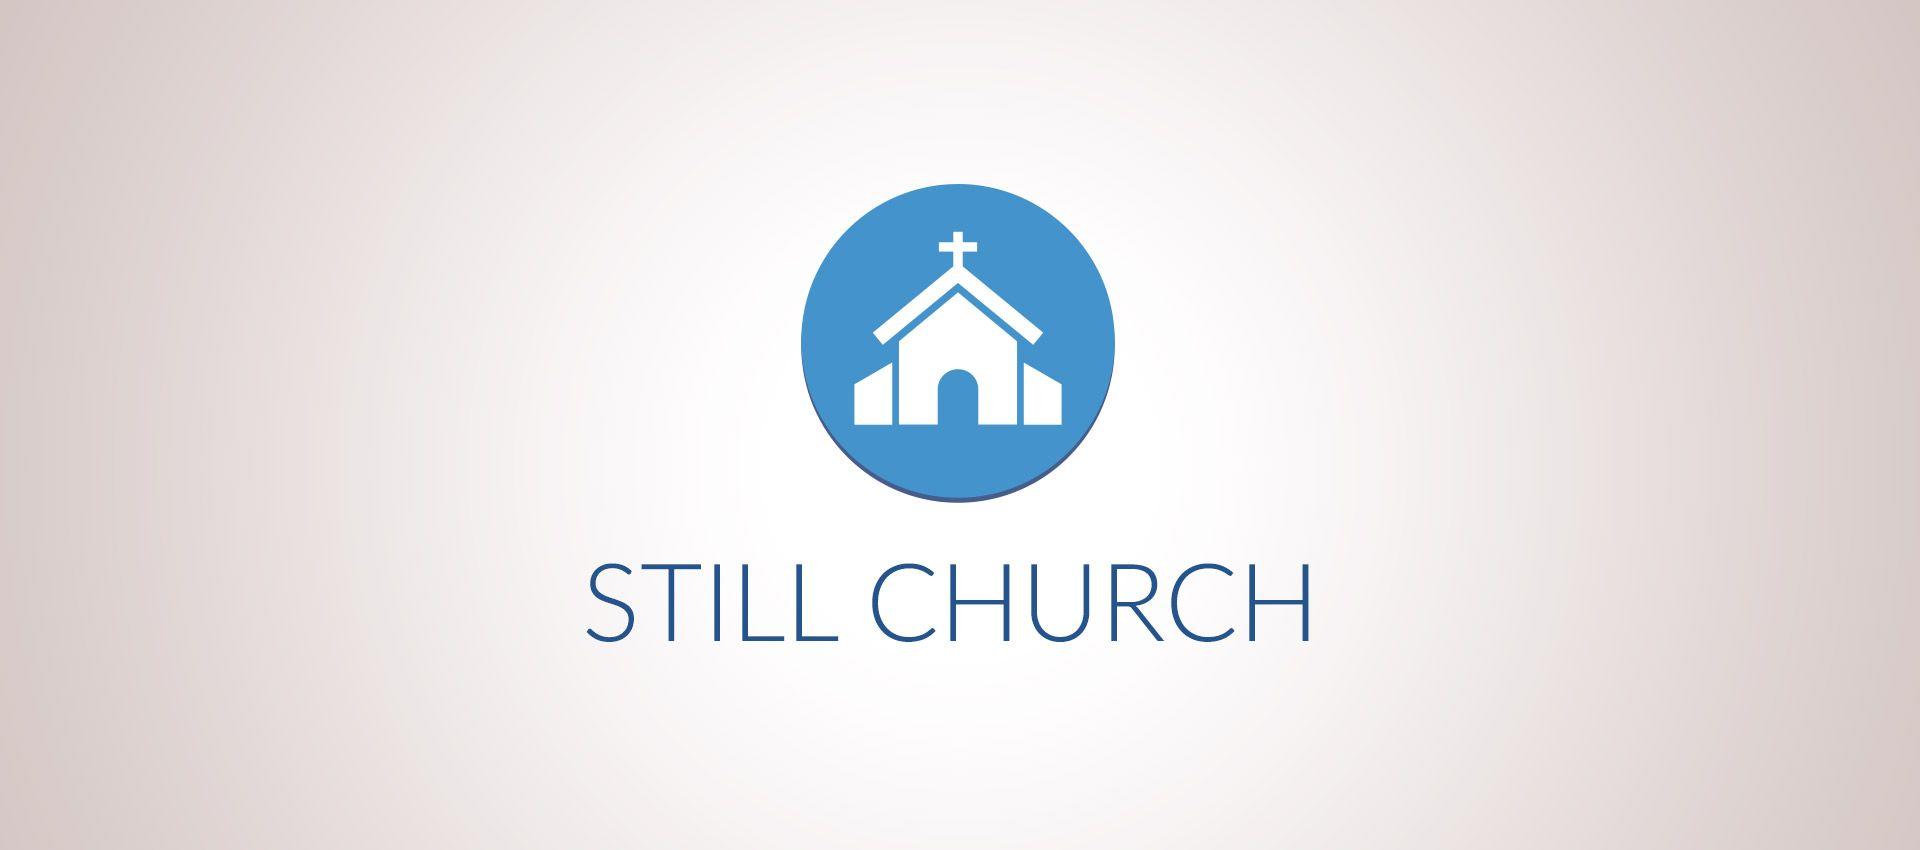 Trendy Church Logo - North Valley Baptist Church|Still Church